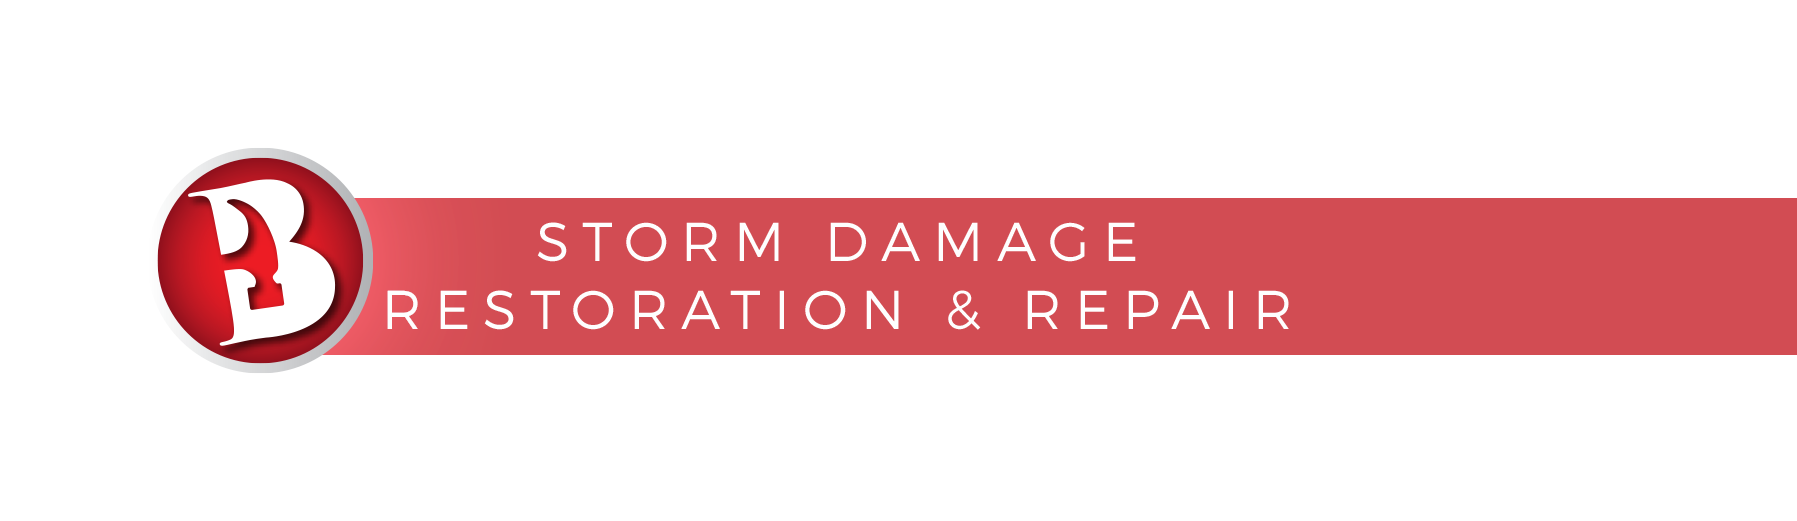 Bachmans Storm Damage Restoration and Repair Transparent Header Logo